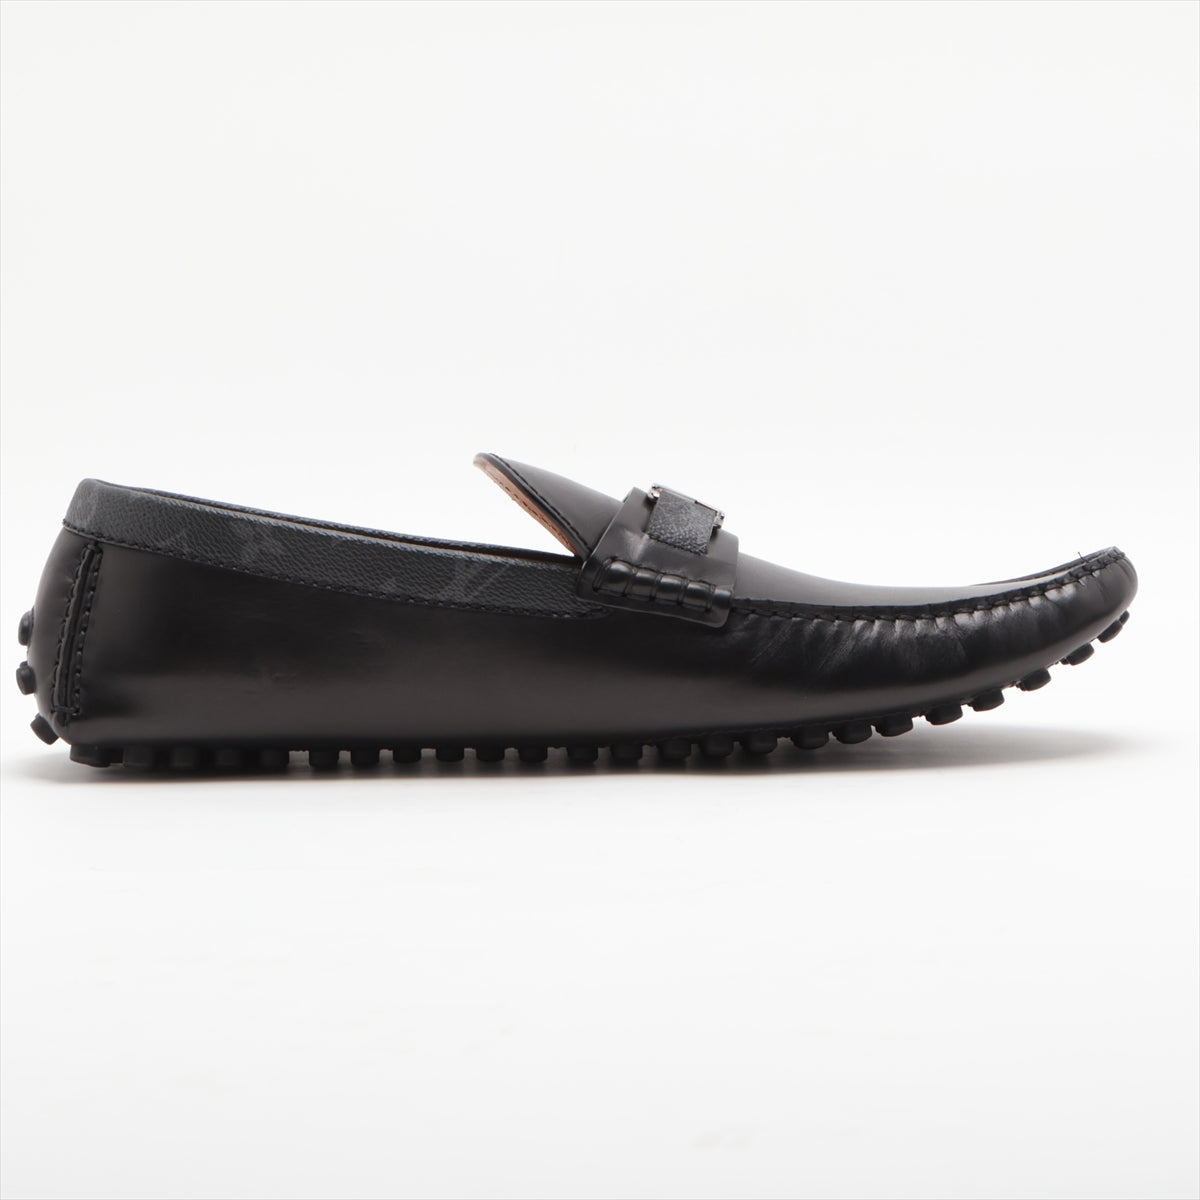 Louis Vuitton Hockenheim Line 20 years Leather Driving shoes 13 Men's Black x Gray ND0210 Monogram